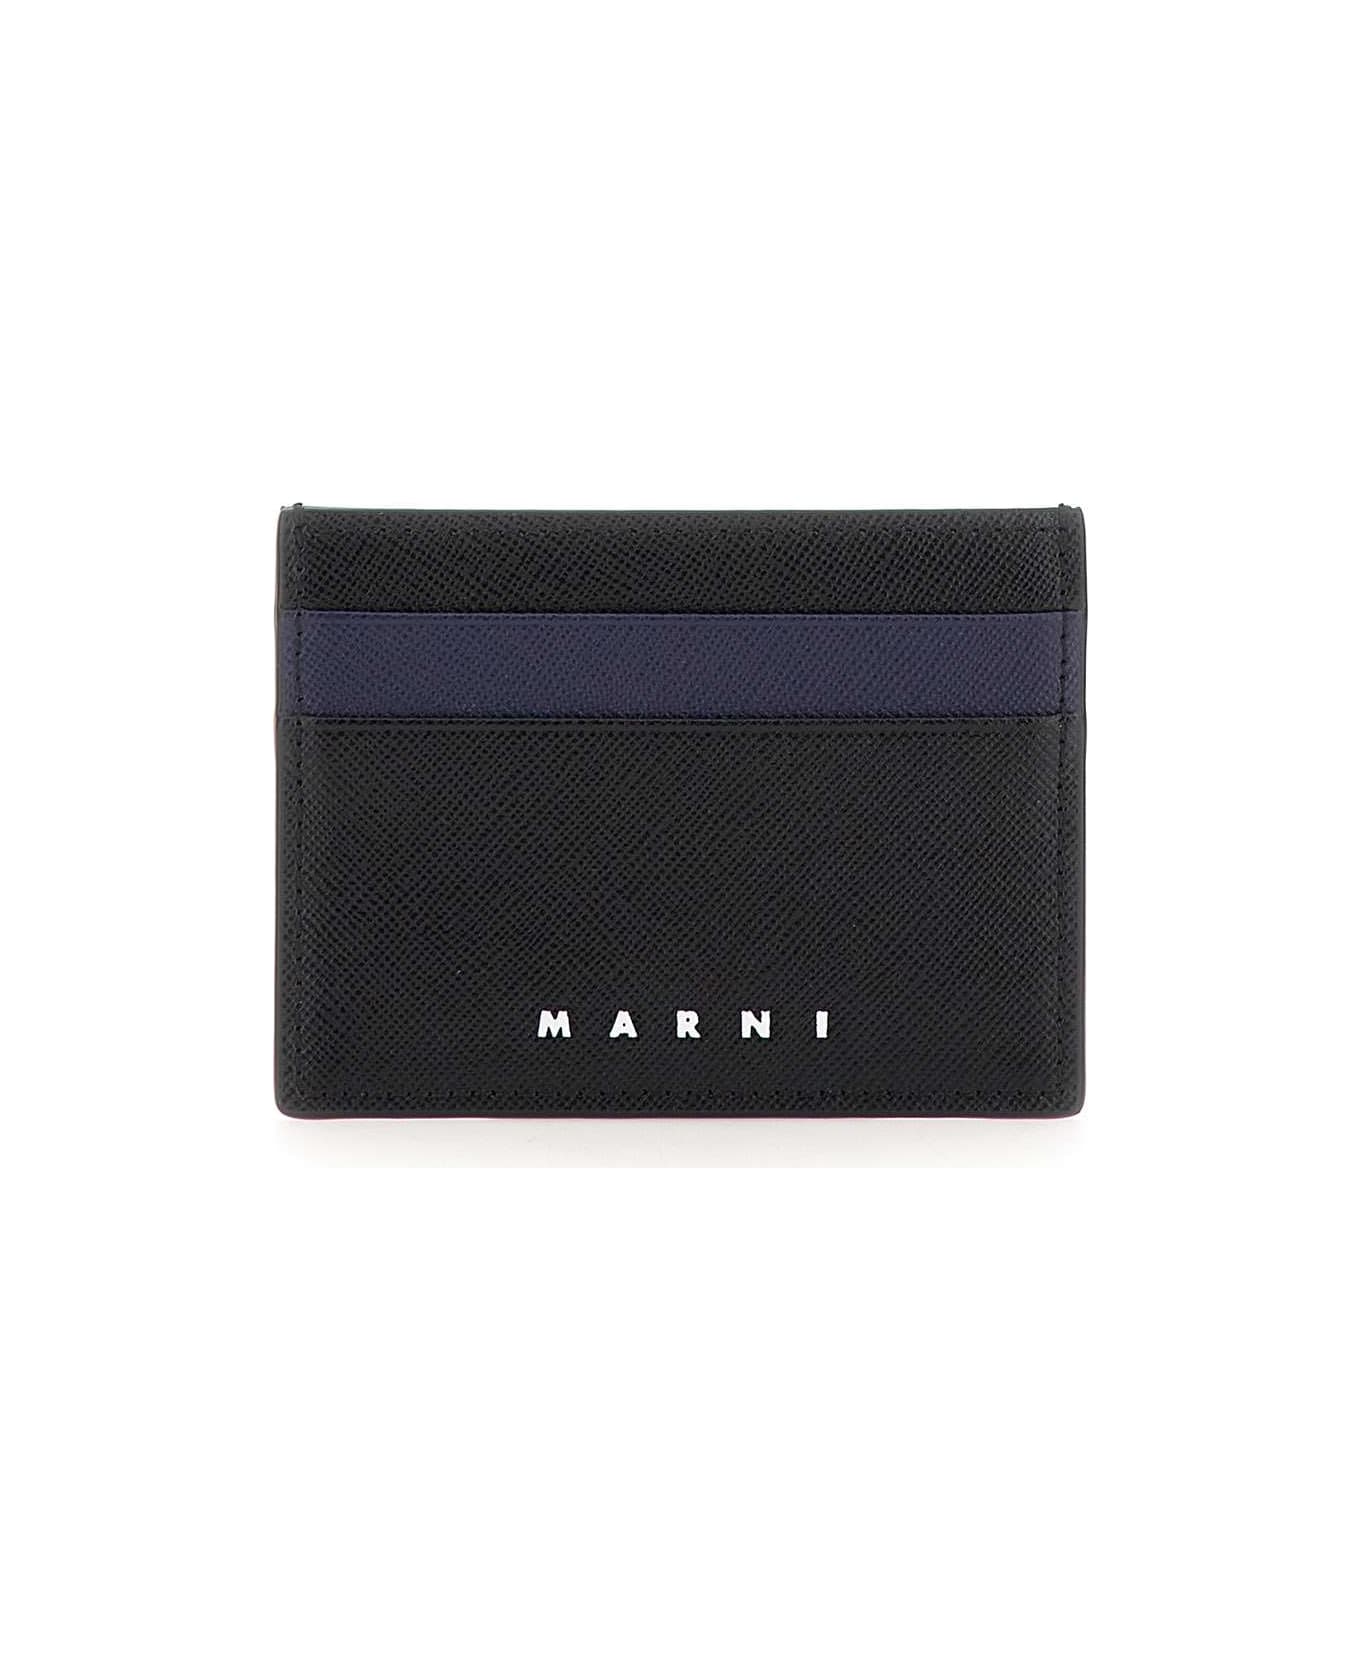 Marni 'cc Holder' Leather Card Holder - BLACK/BLUBLACK